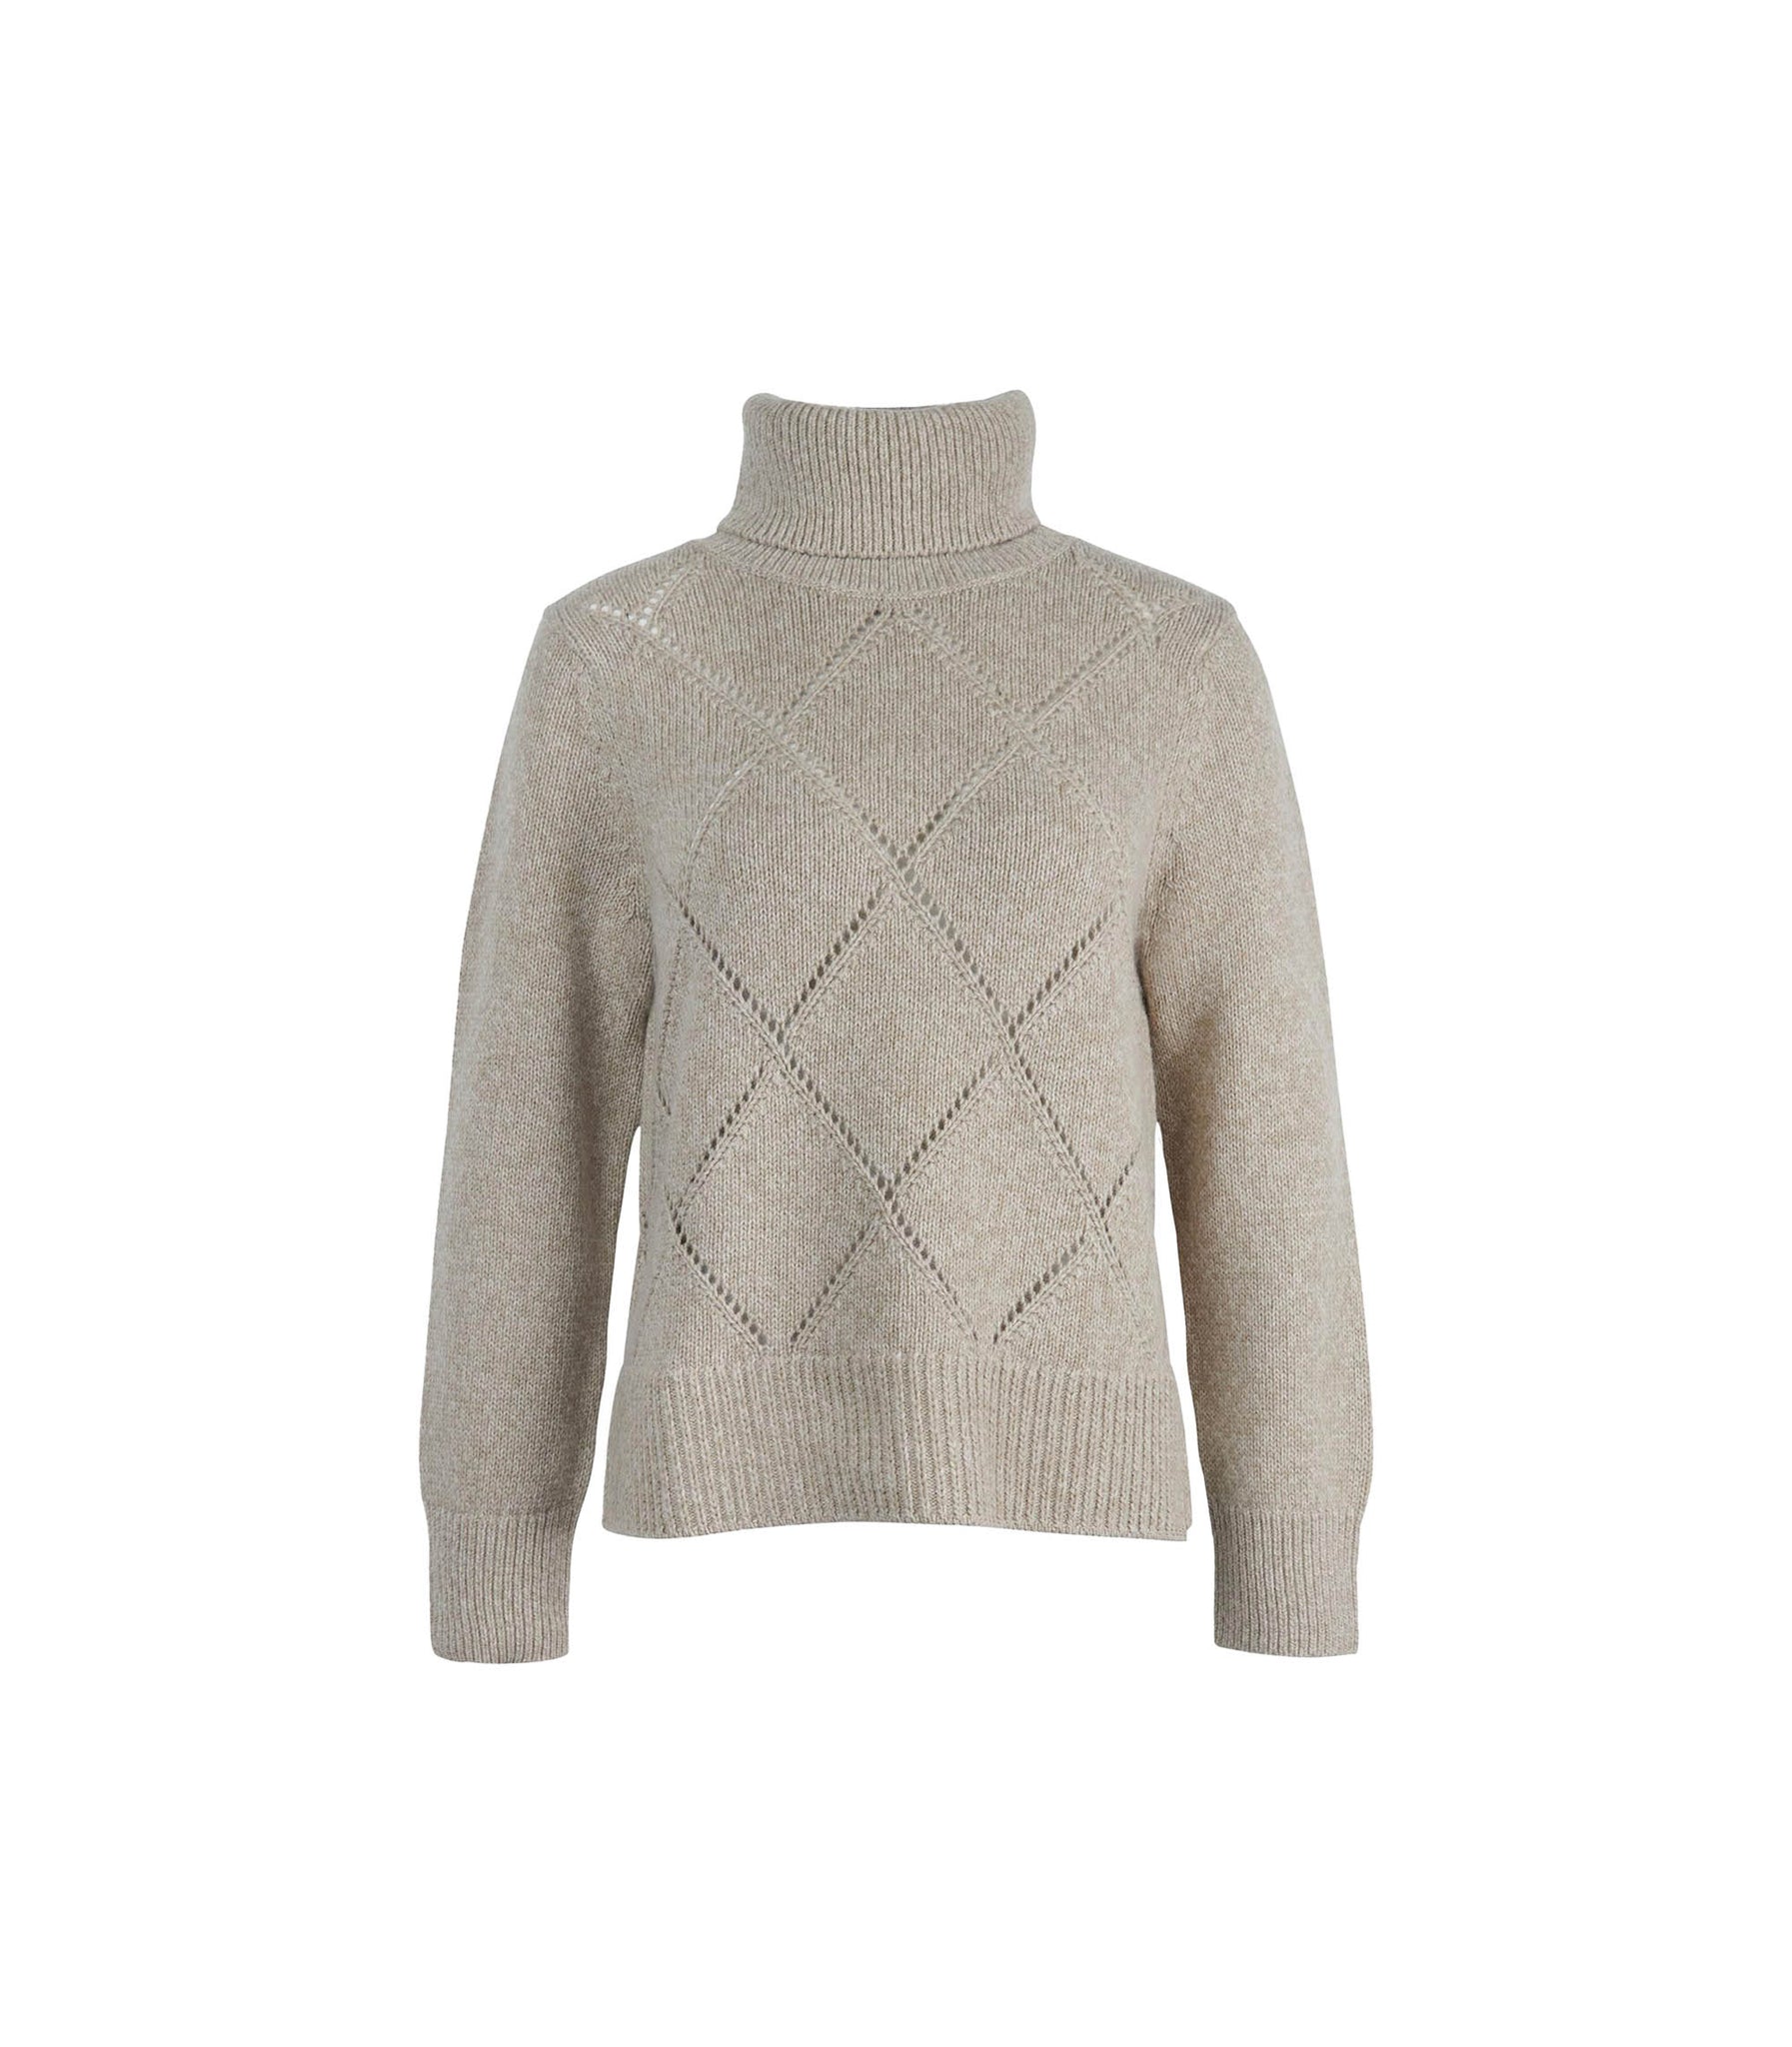 Barbour Laverne Knit Beige Women's Sweater